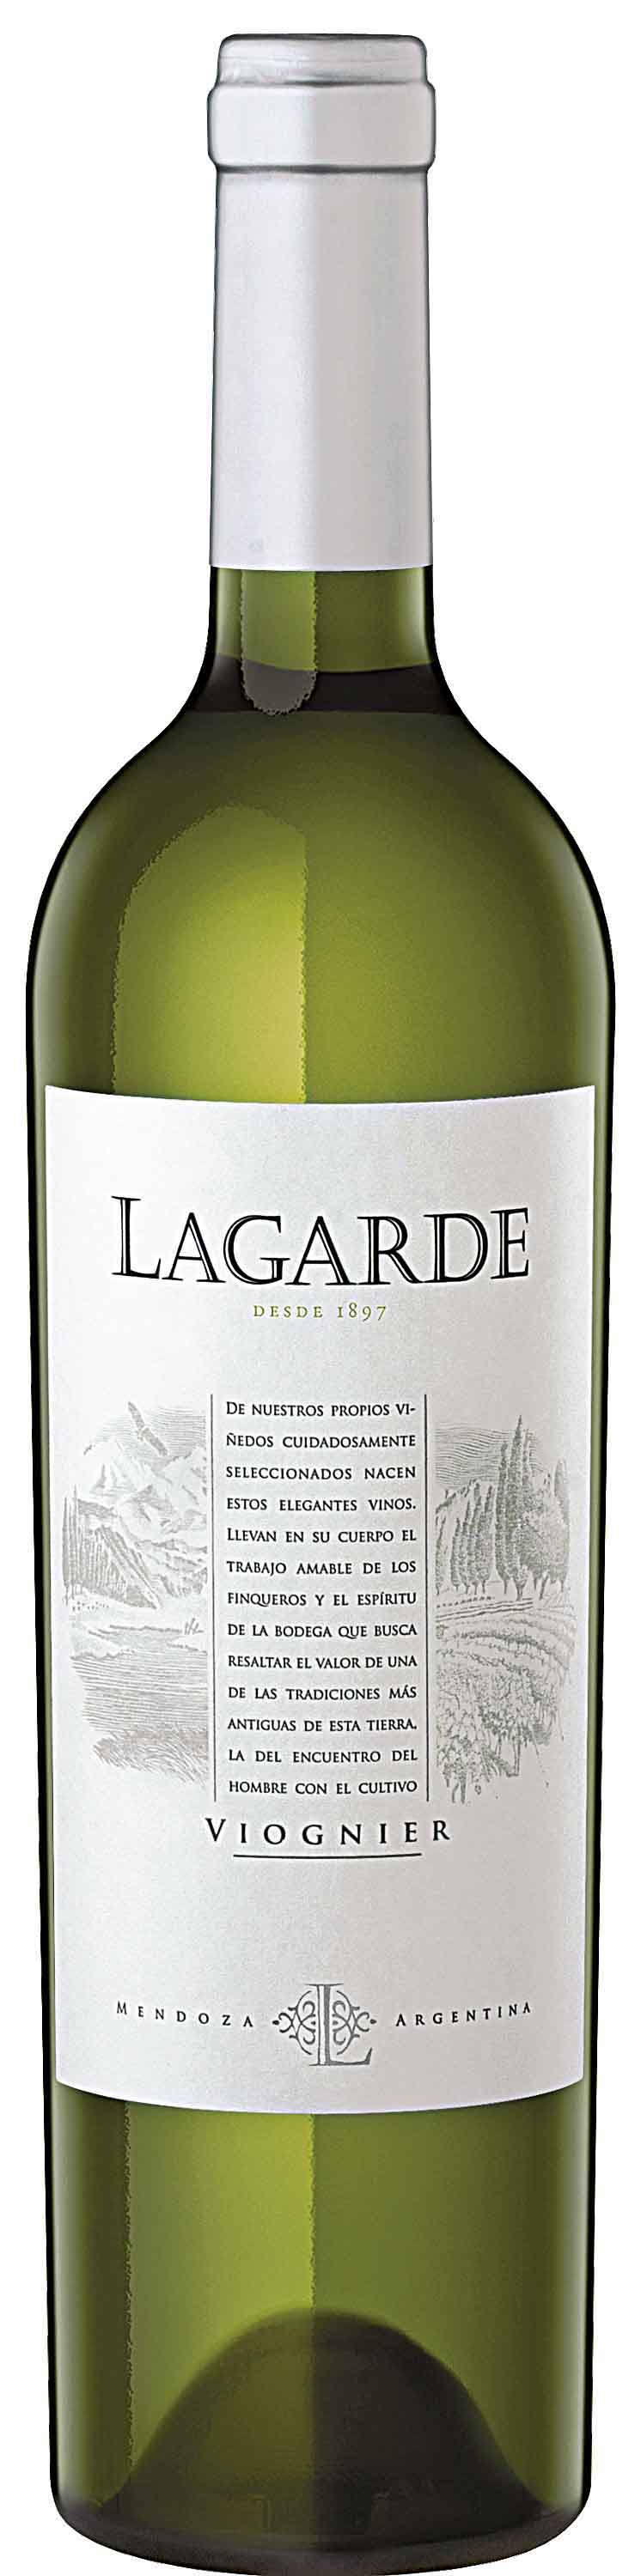 Lagarde Viognier, Mendoza, Argentina 2013, £9.88